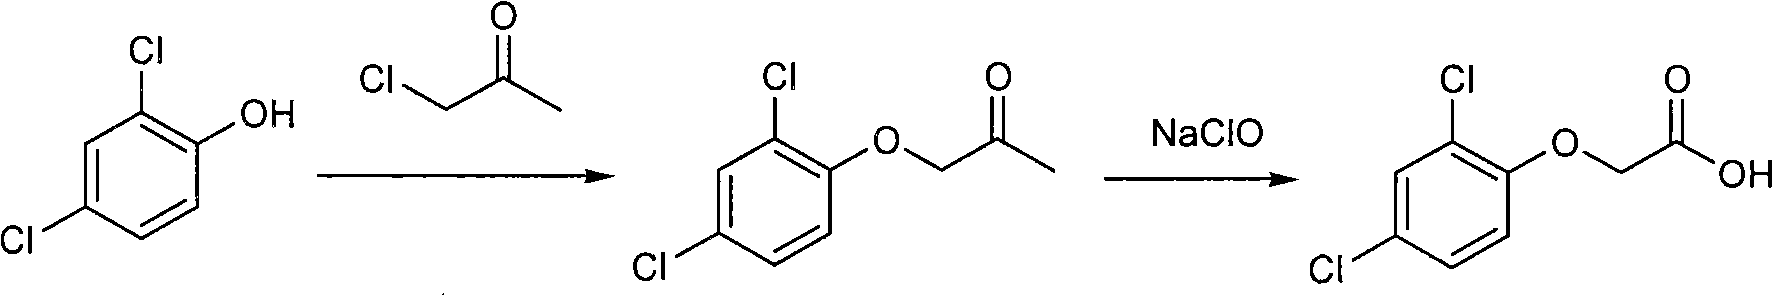 Synthesis method of herbicide 2, 4-dichlorphenoxyacetic acid